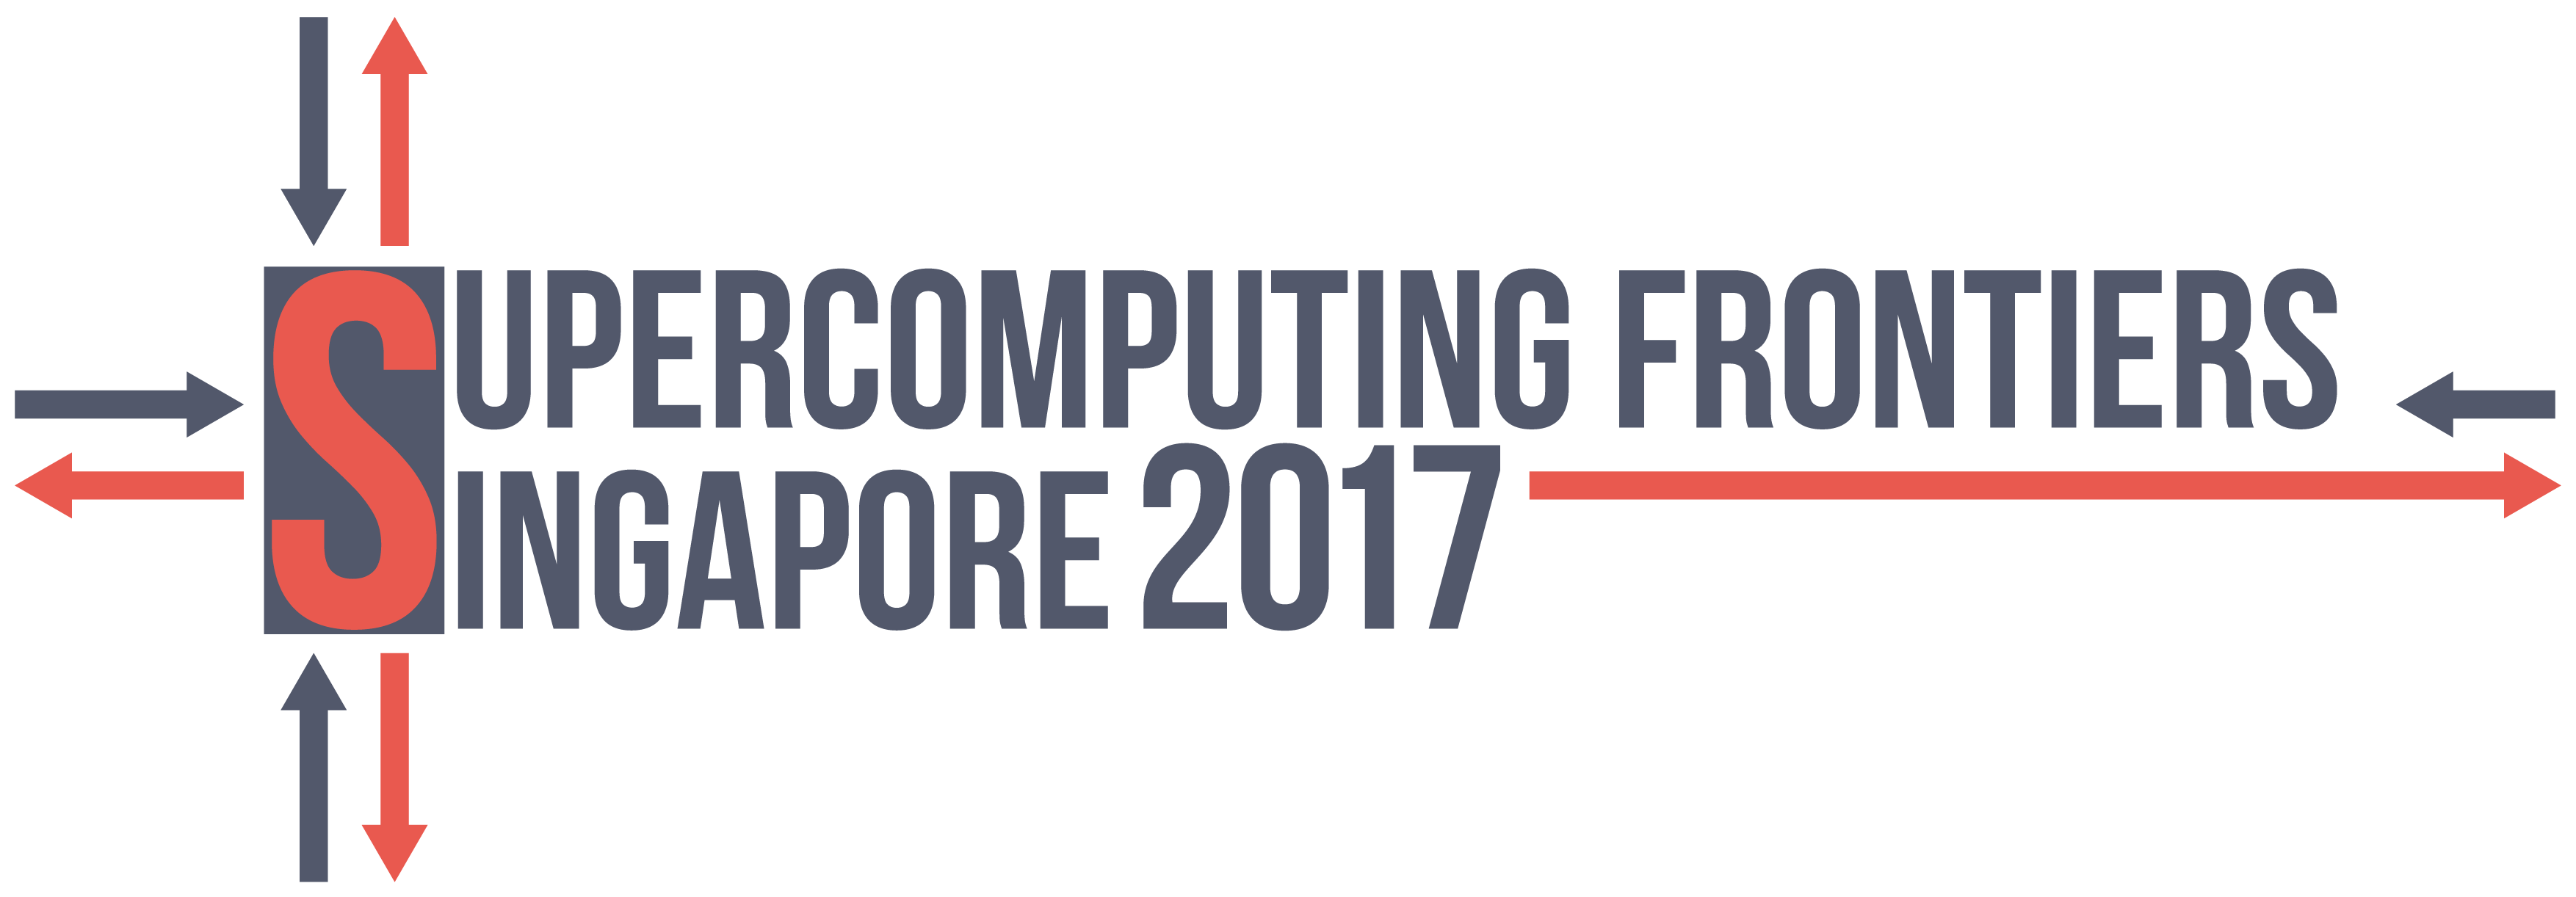 Supercomputing Frontiers 2017